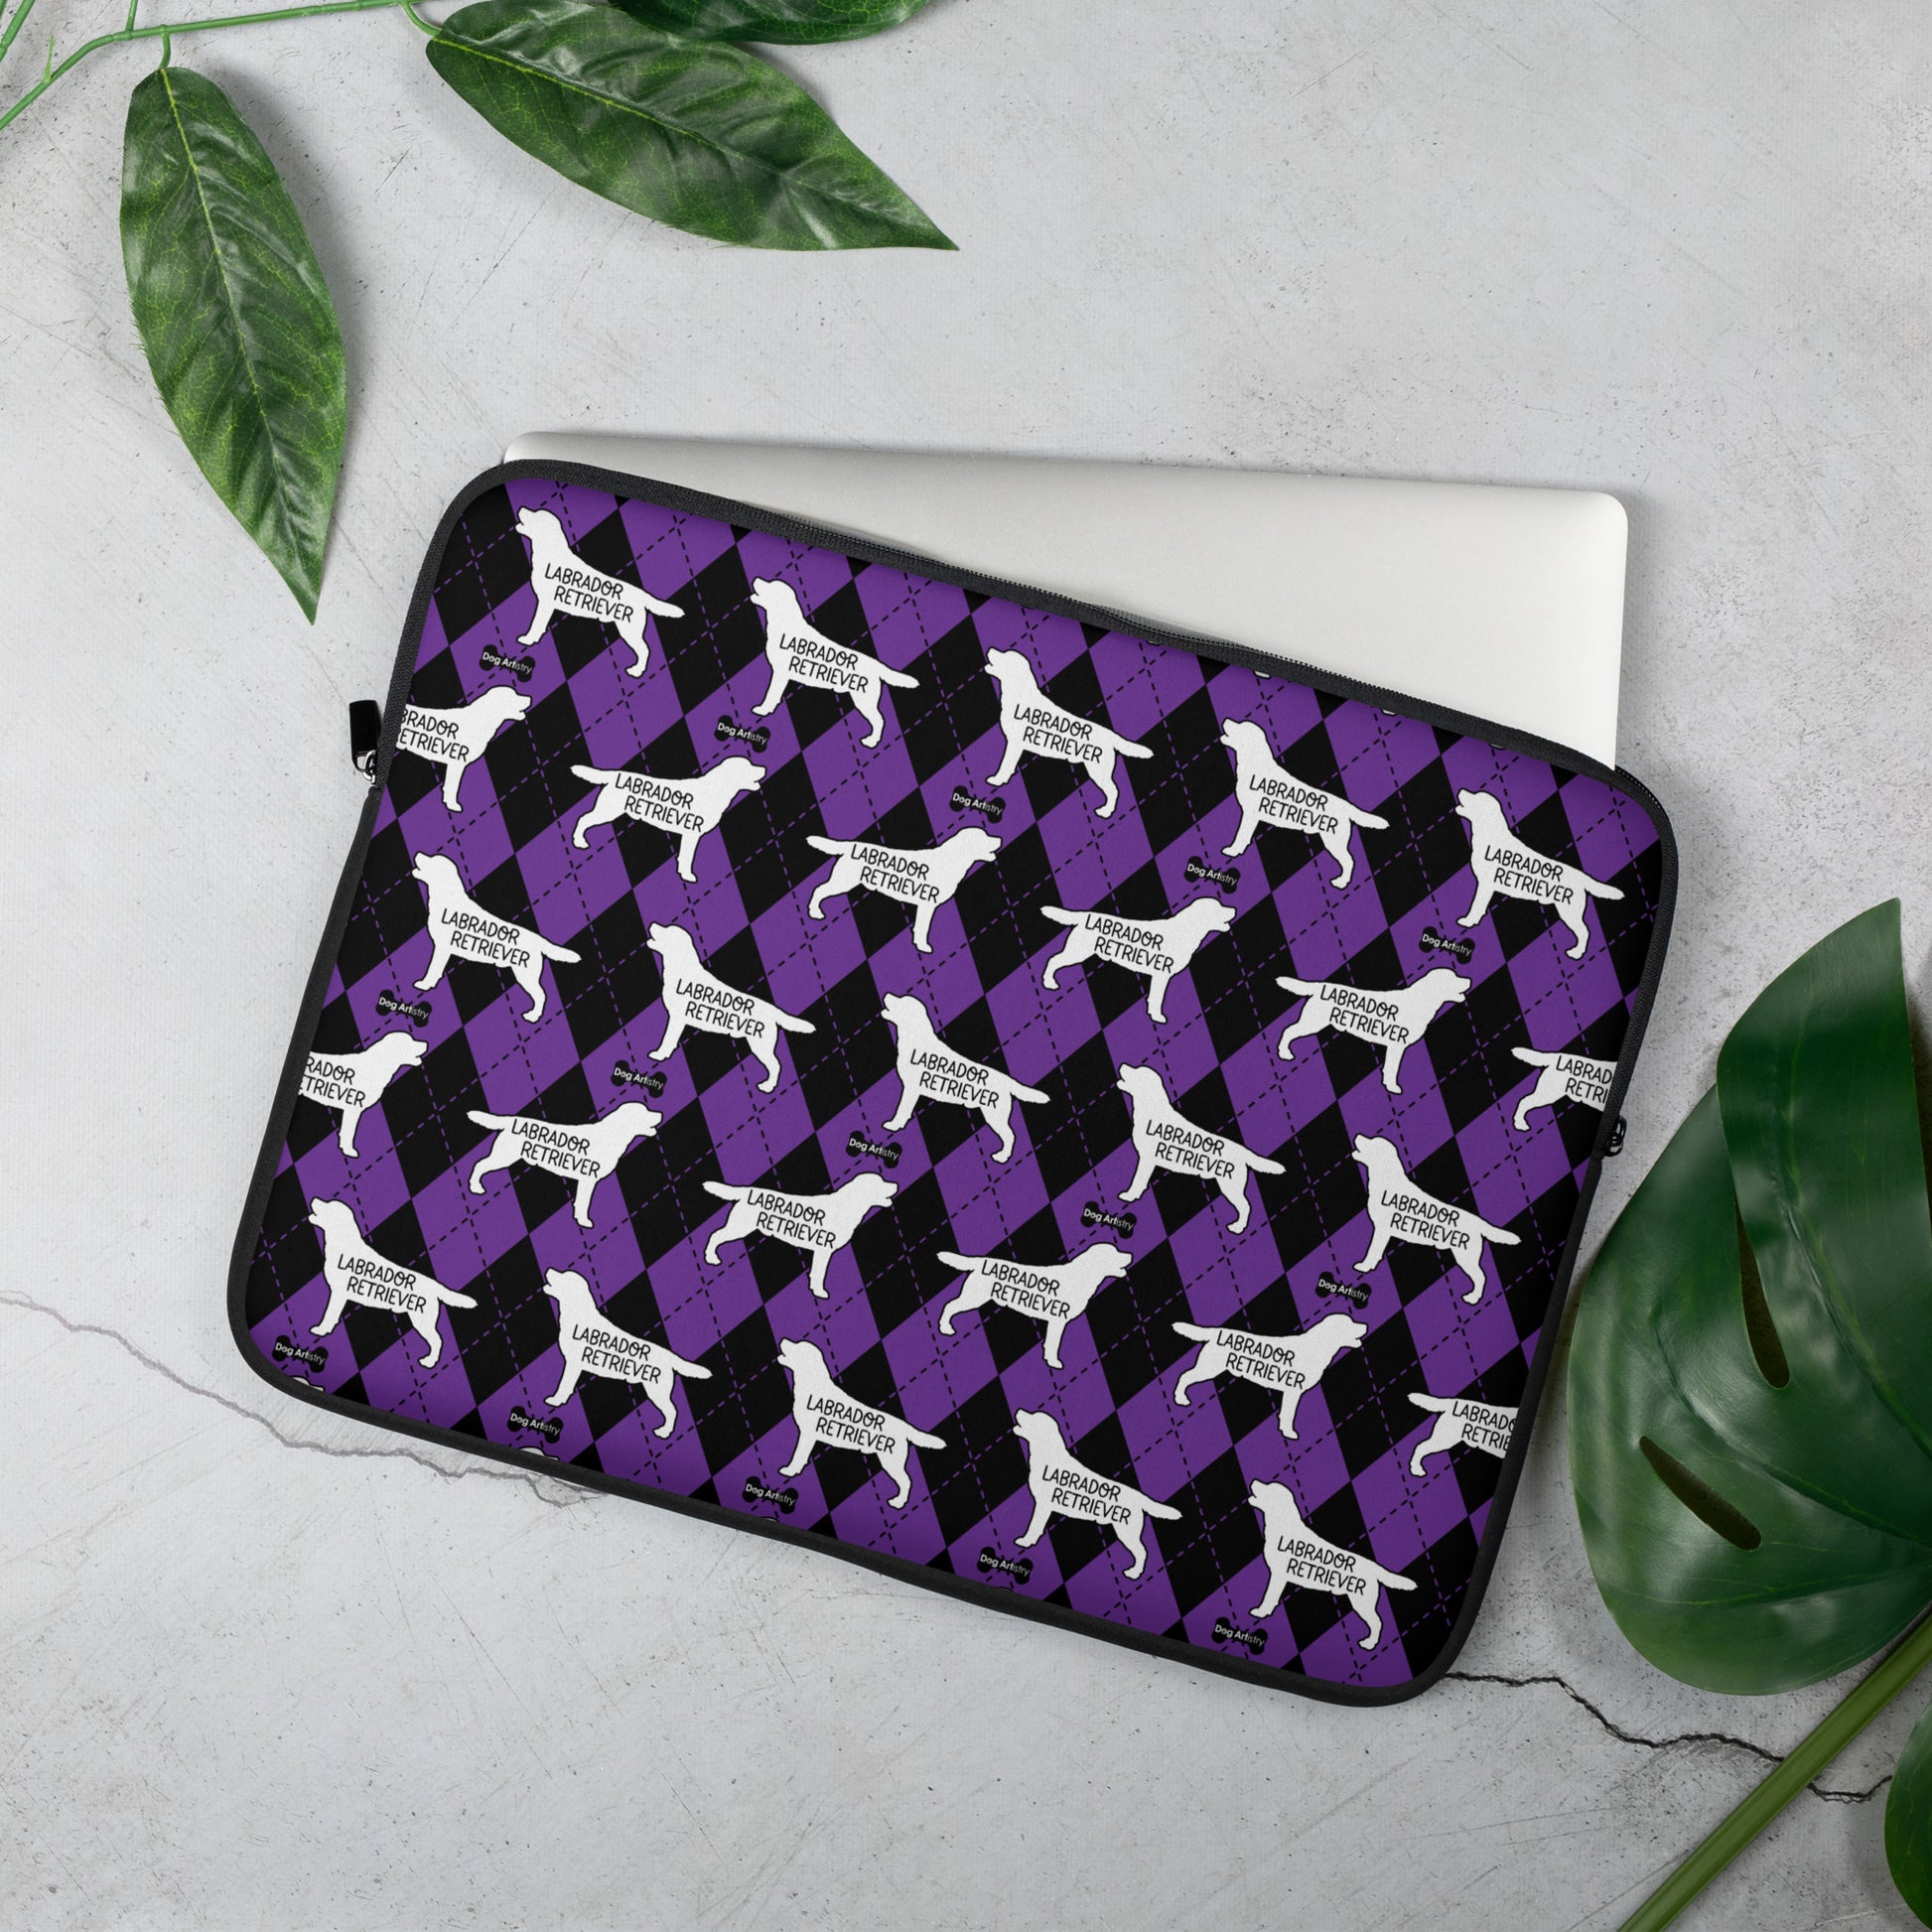 Labrador Retriever purple and black argyle laptop sleeve by Dog Artistry